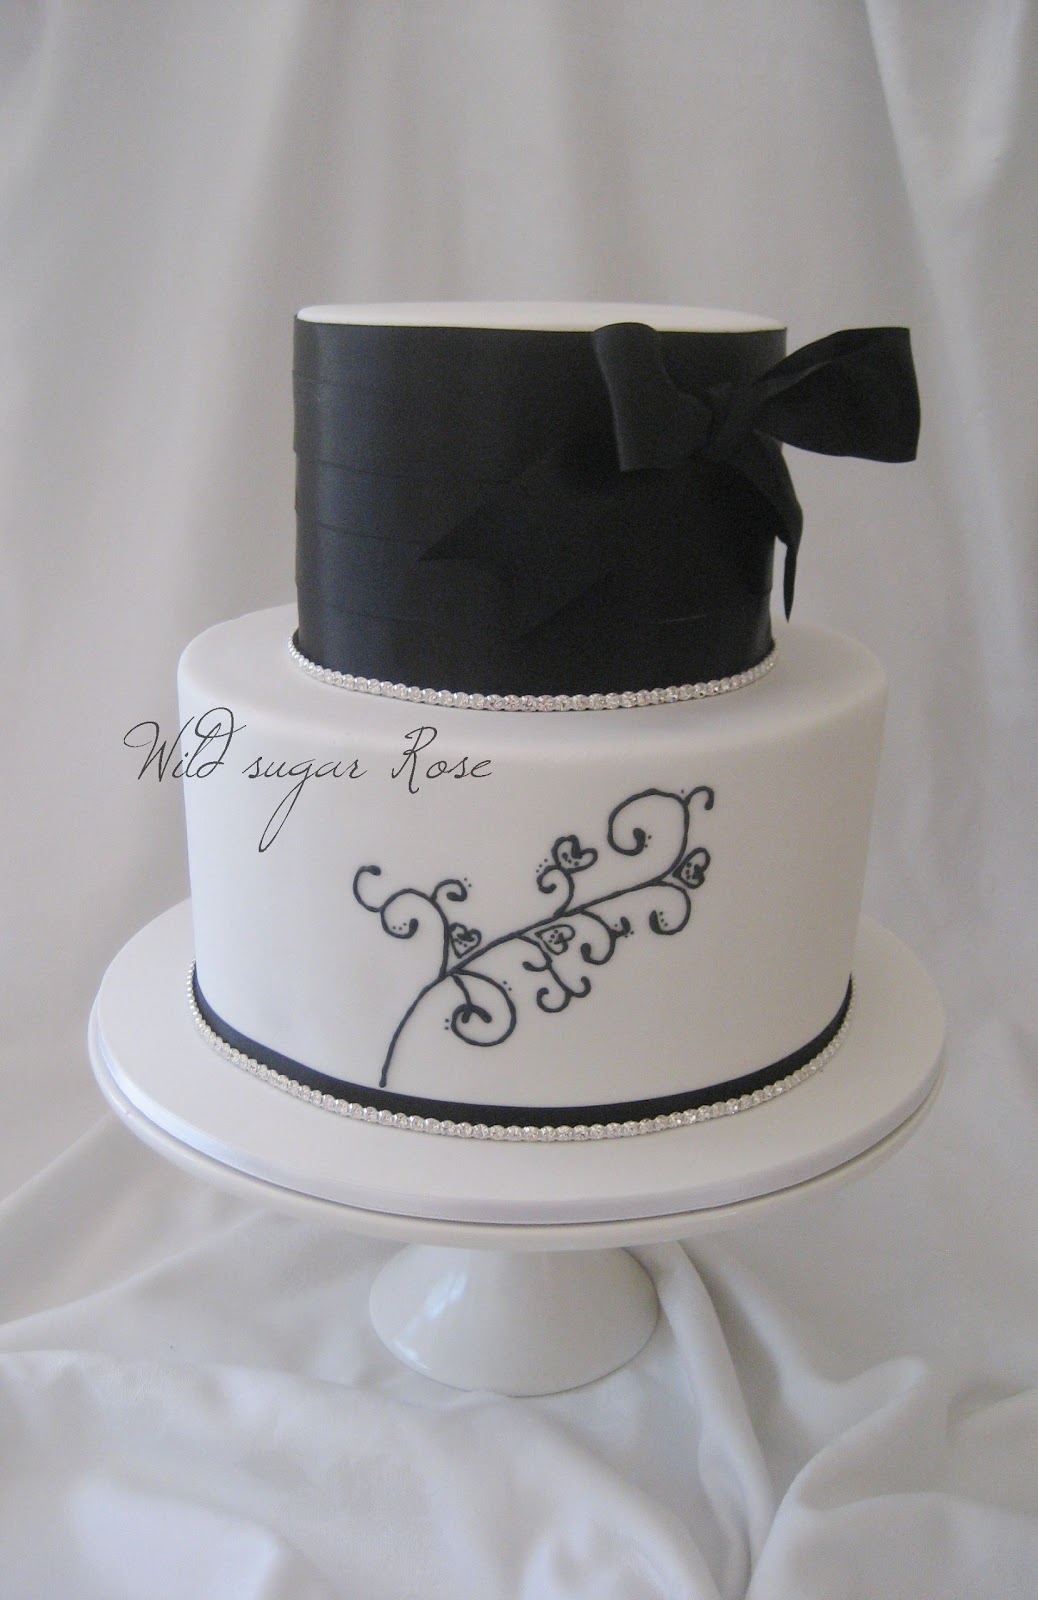 bling wedding cake ideas  Masquerade ball cake in her colour scheme. I enjoyed making this cake